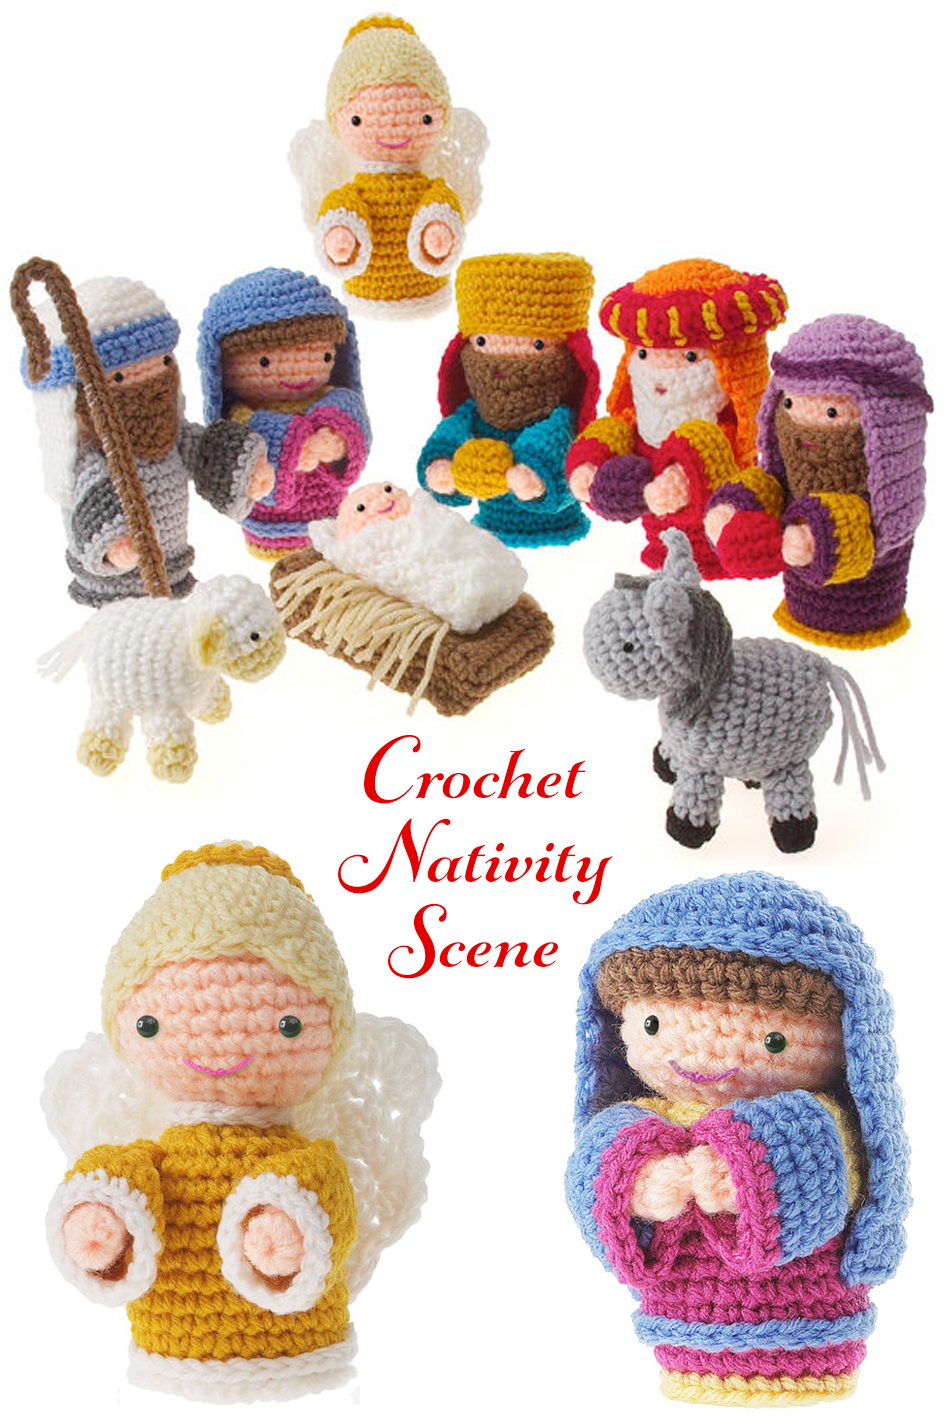 Crochet Nativity